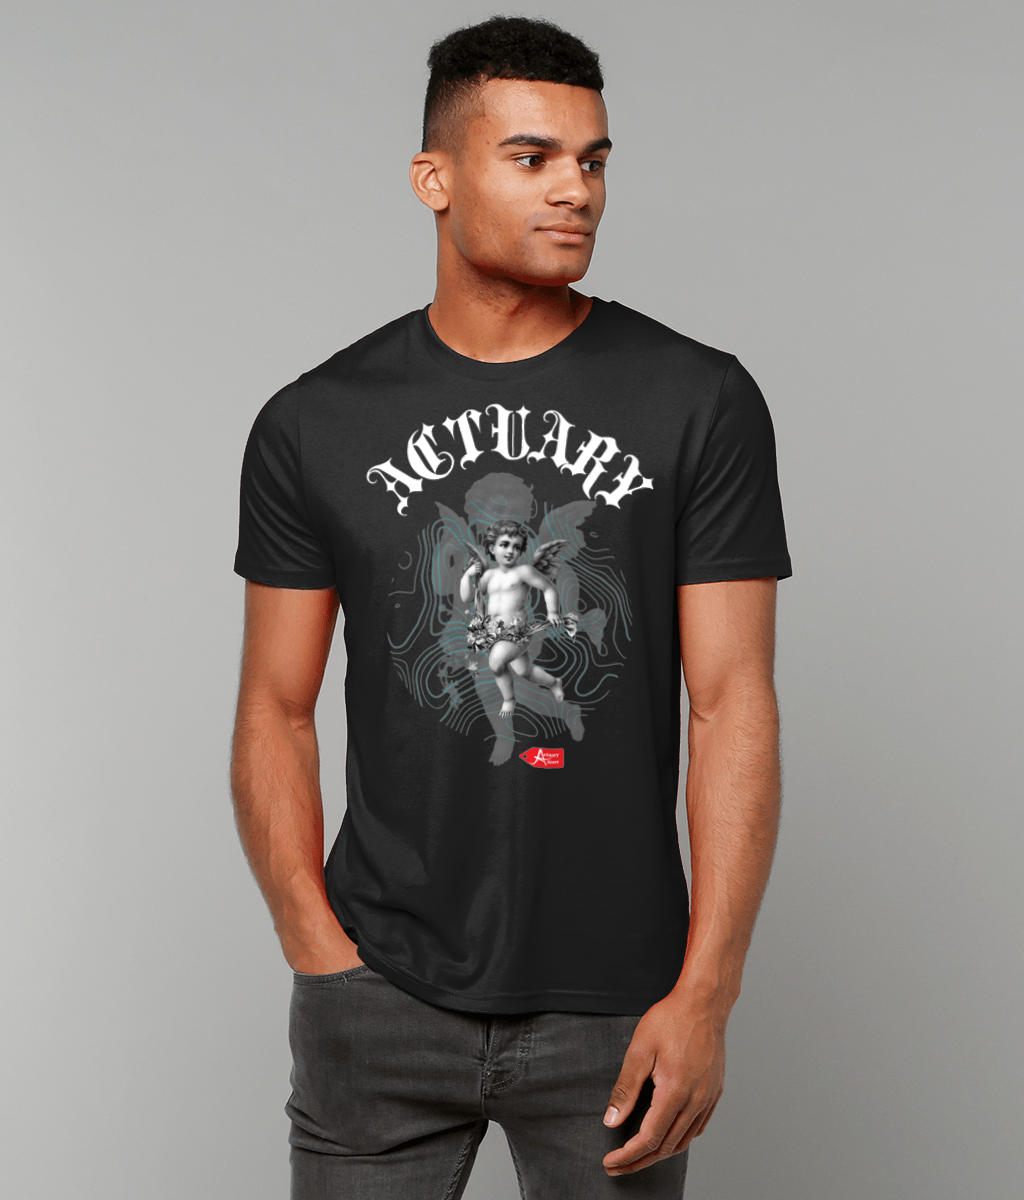 Actuary Black Teal Gothic Cupid Illustration Black T-Shirt